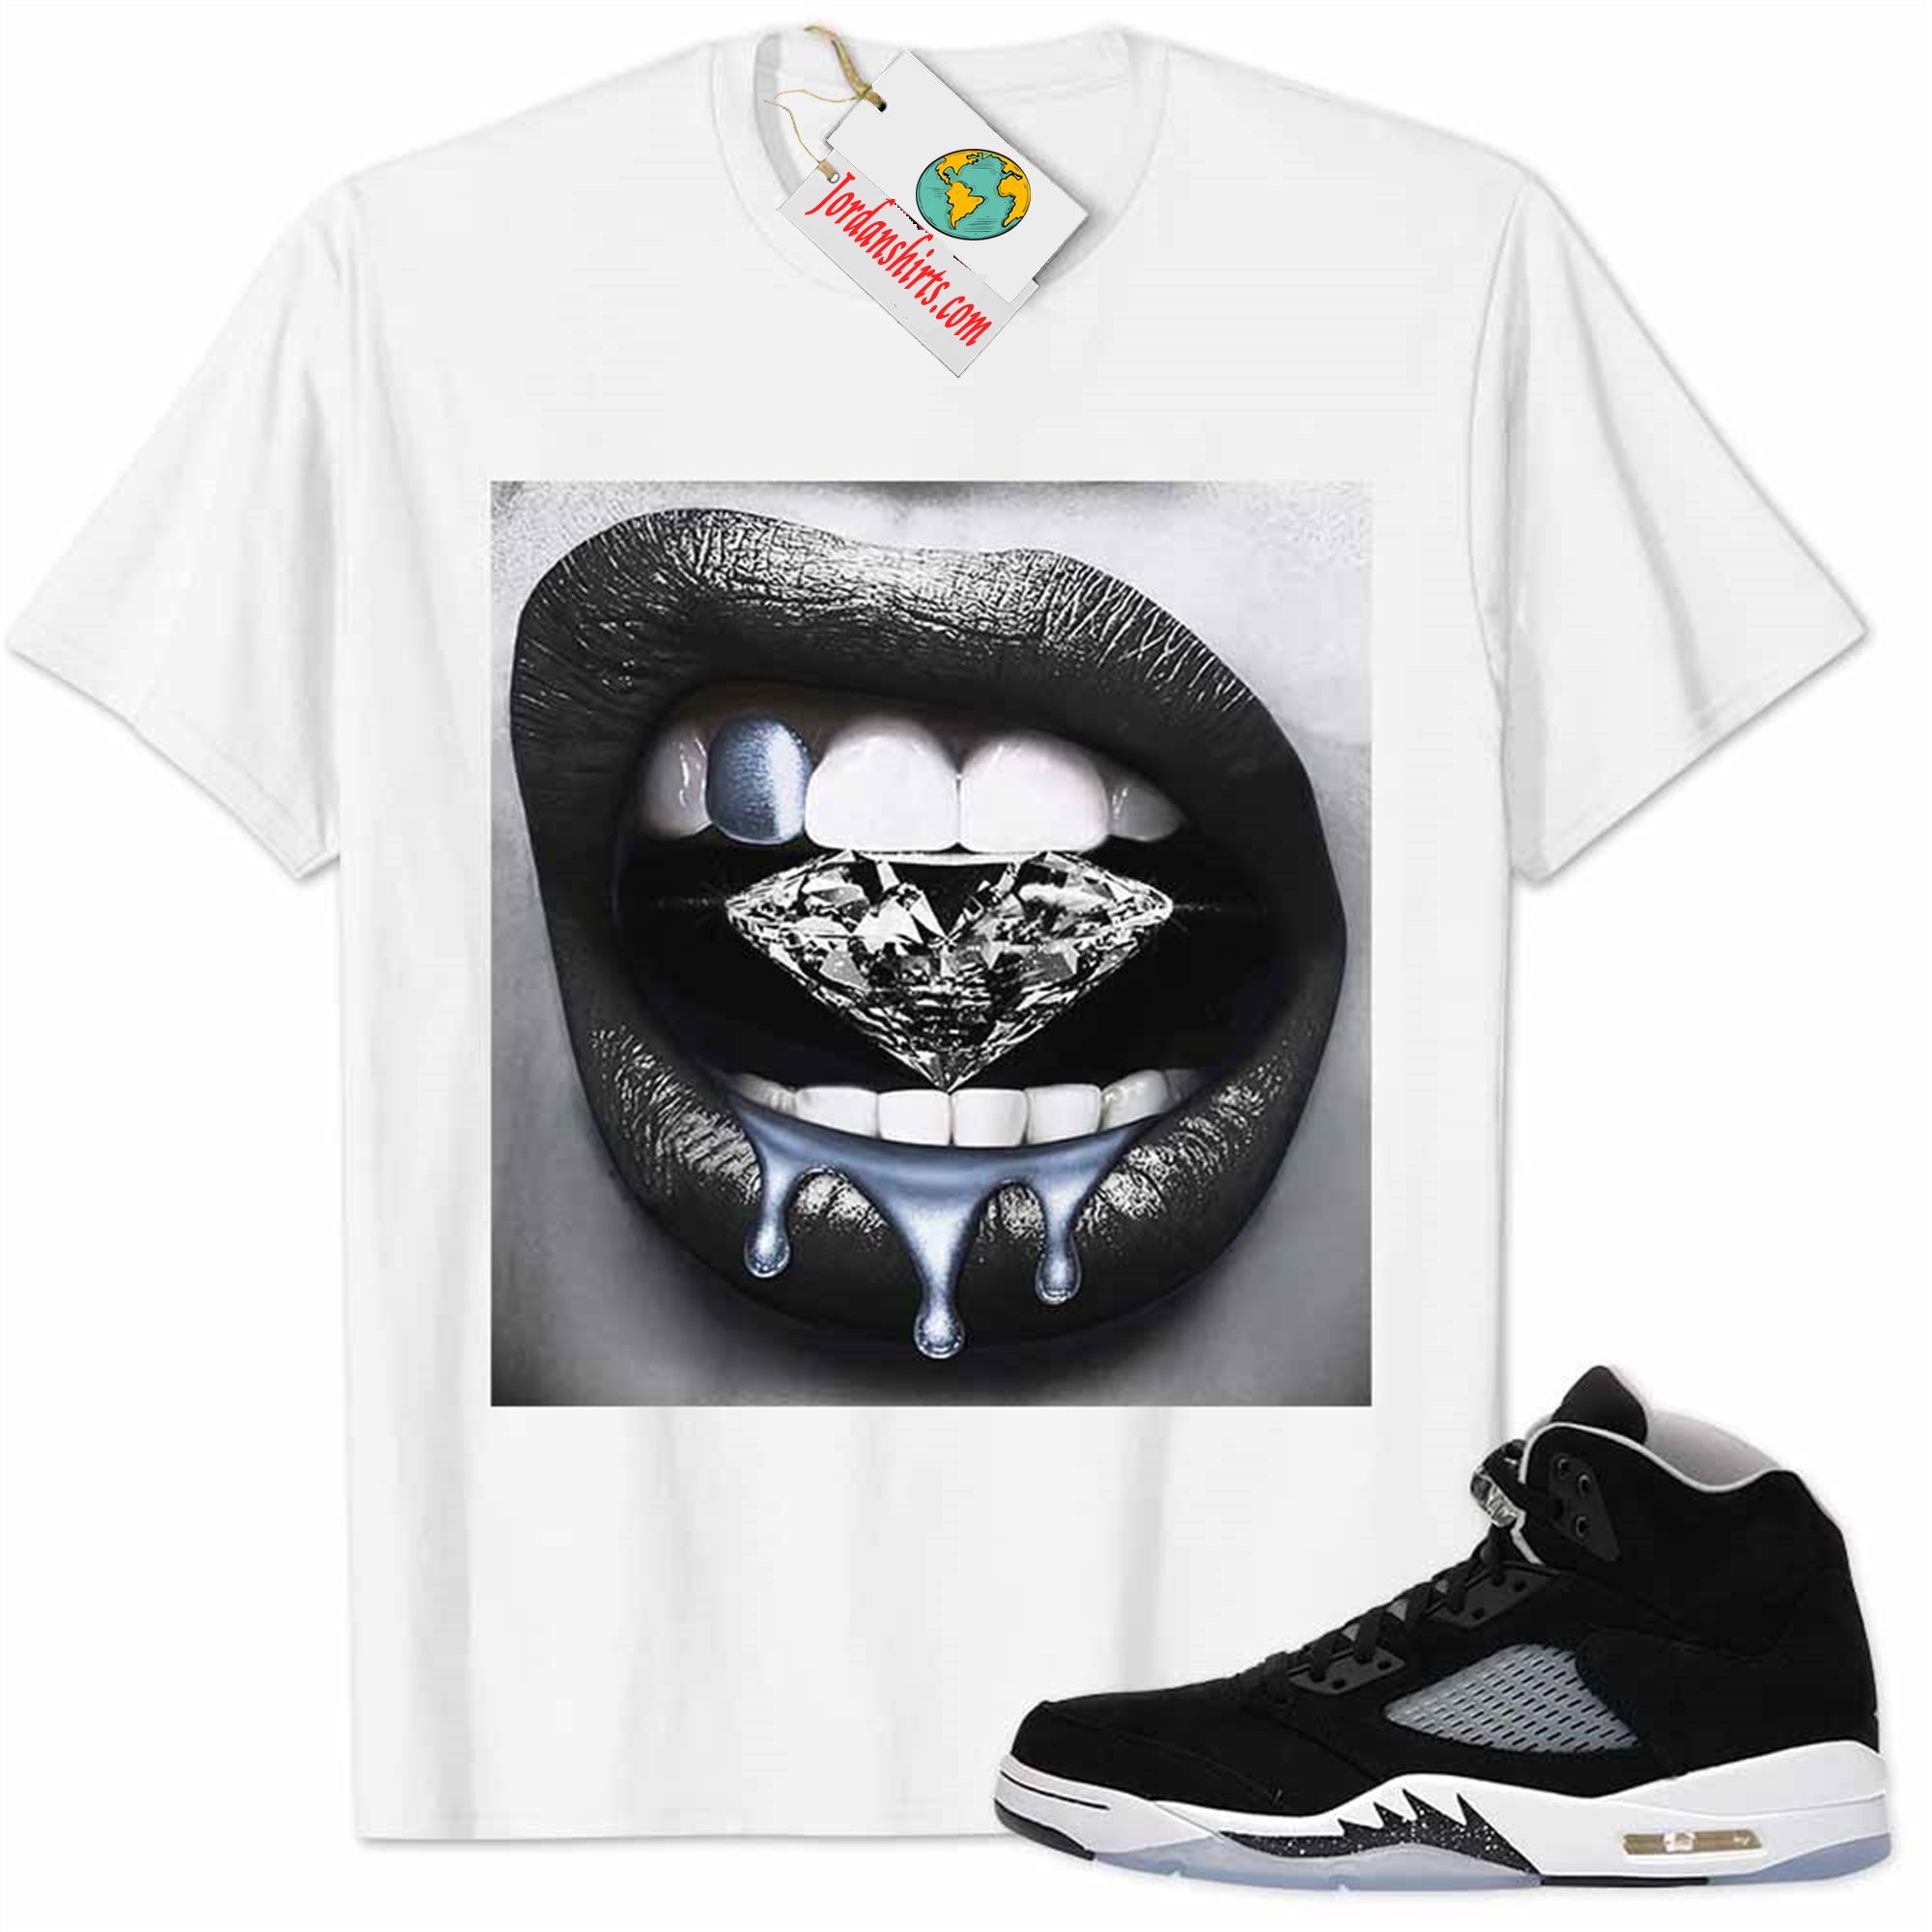 Jordan 5 Shirt, Moonlight Shirt Sexy Lip Bite Diamond Dripping White Plus Size Up To 5xl